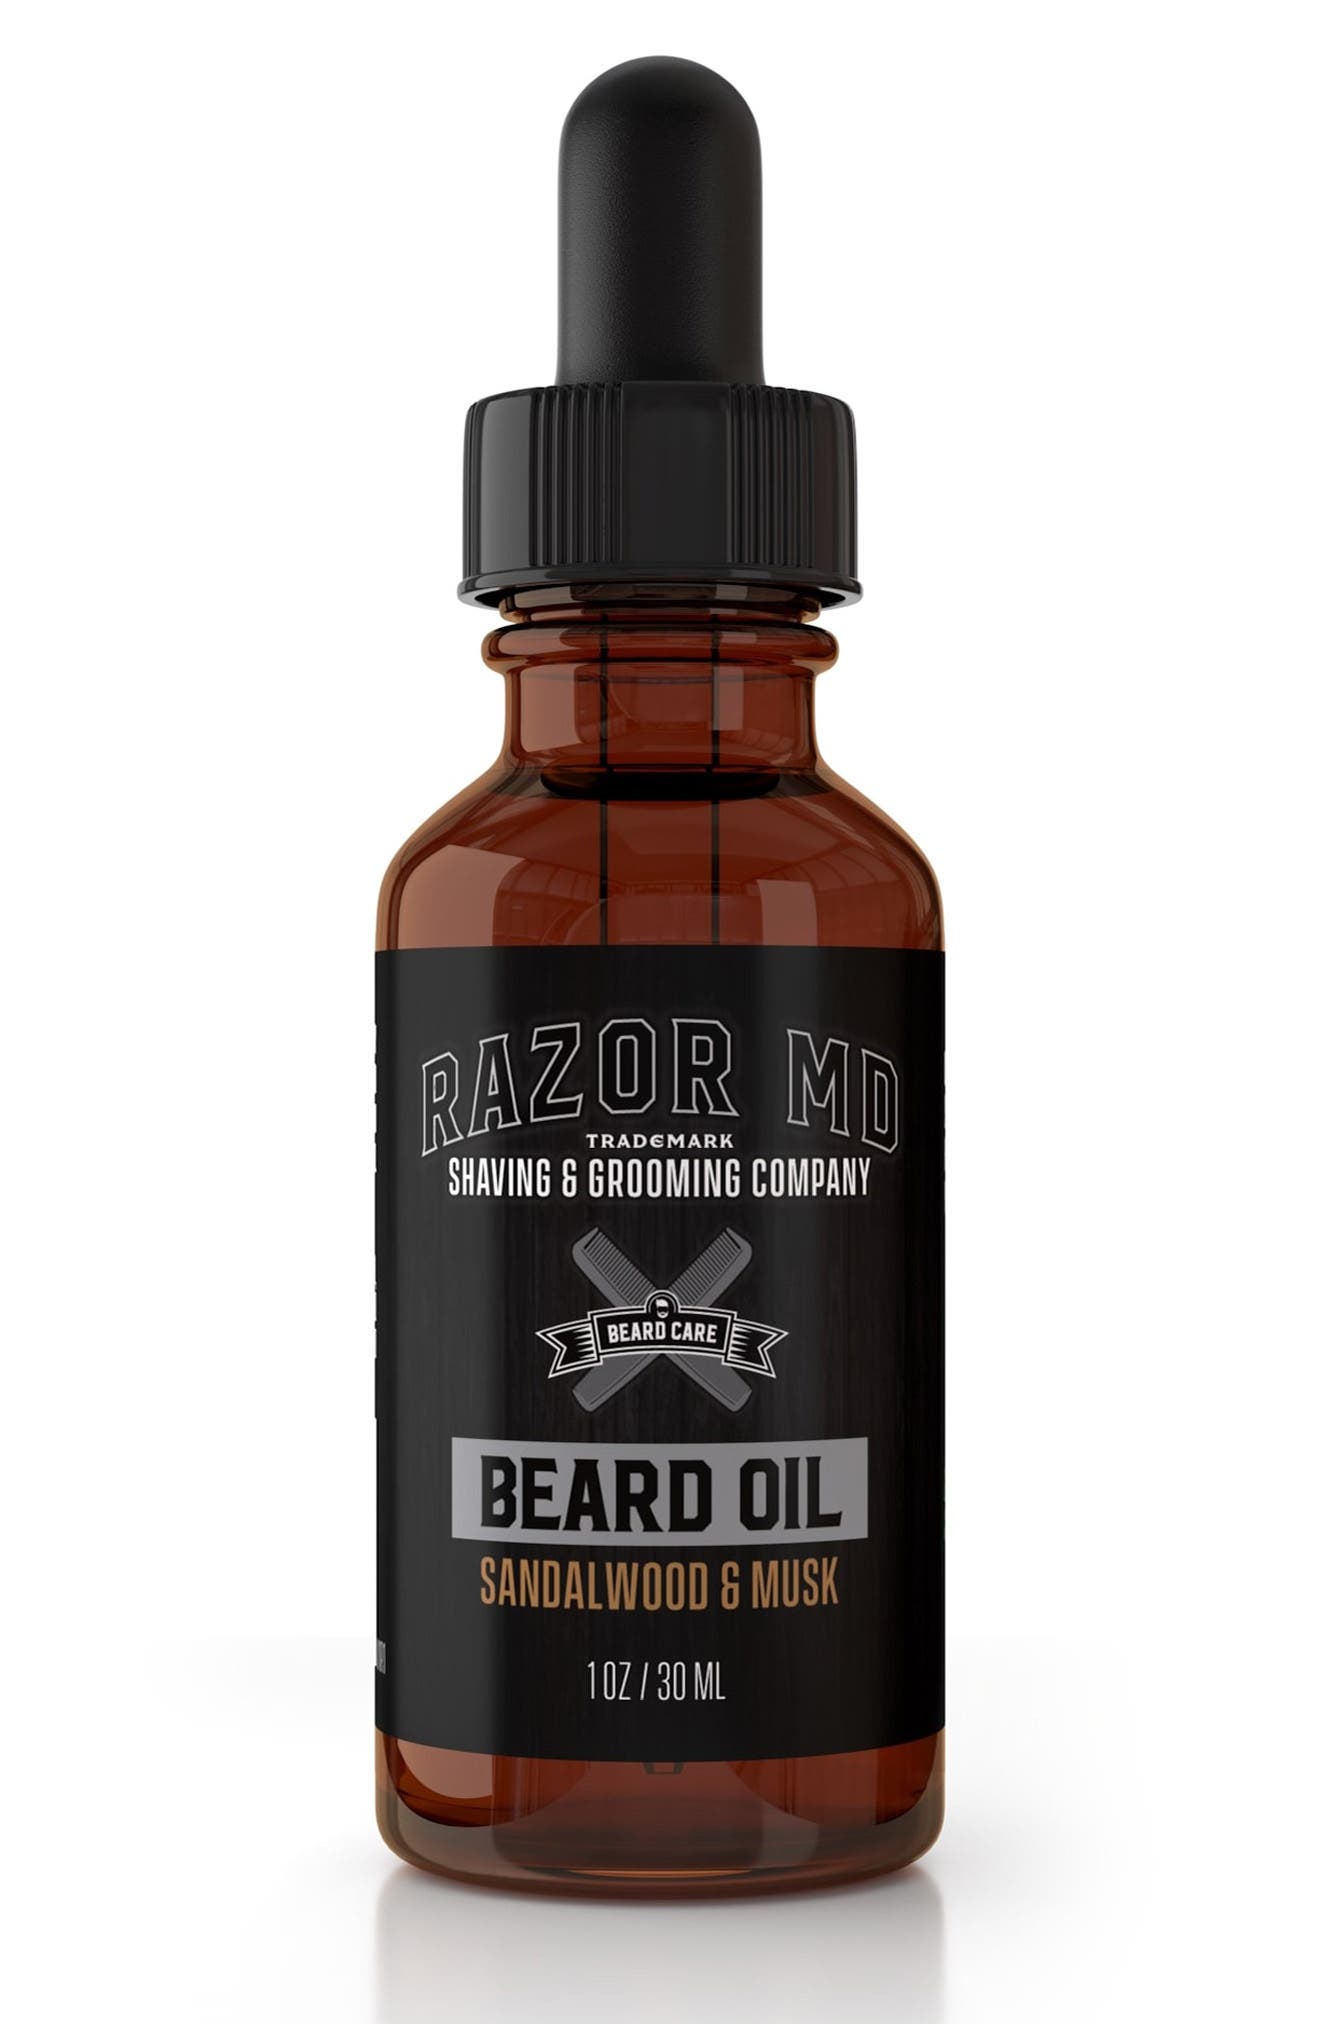 Razor Md Beard Oil